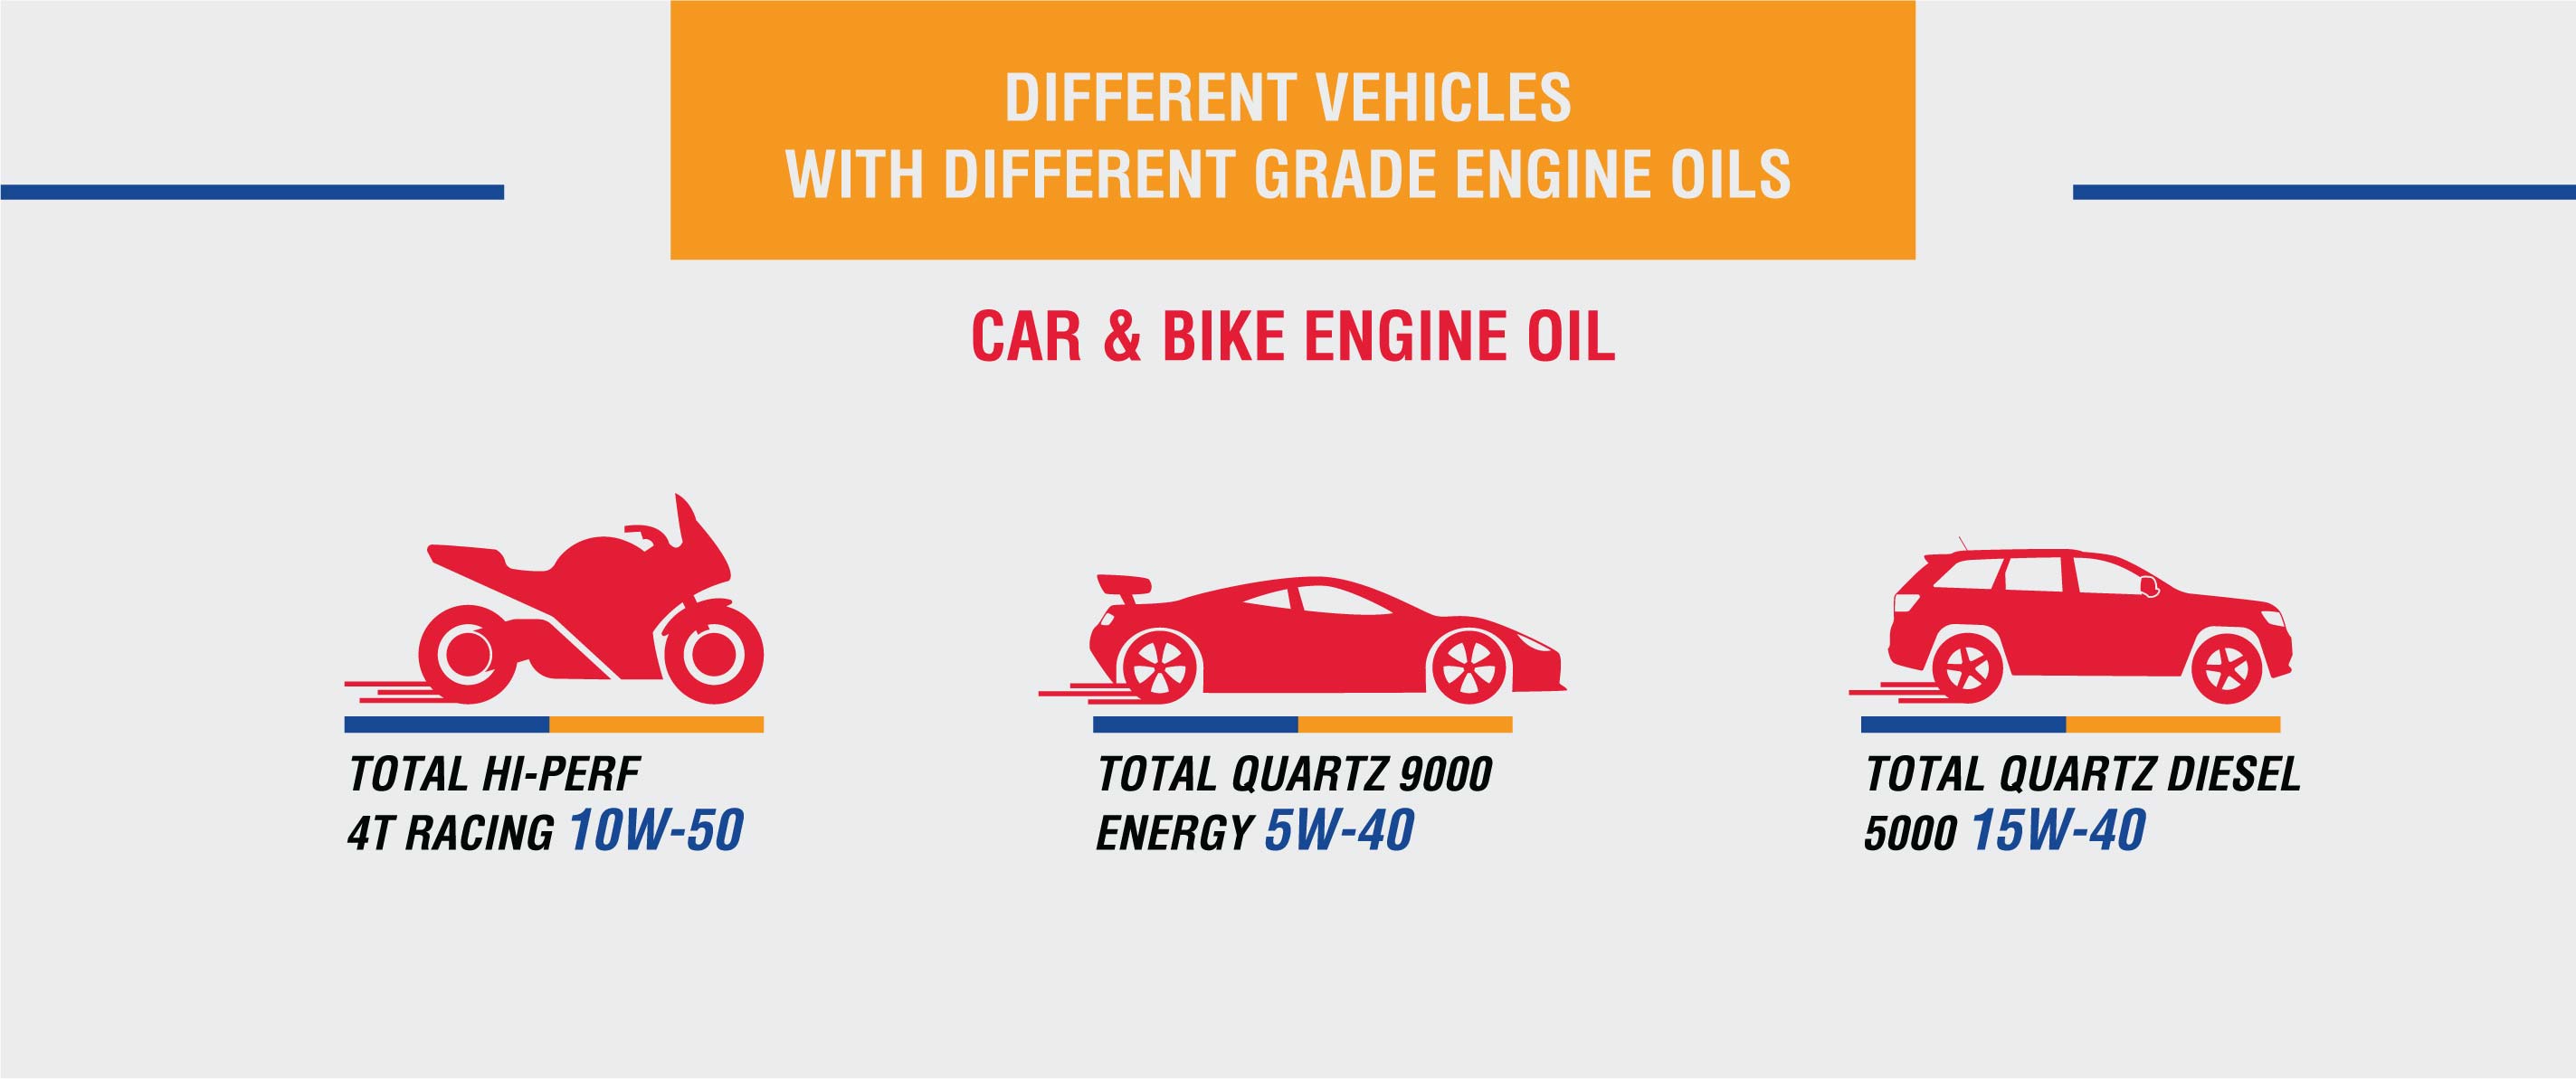 car bike engine oil grades